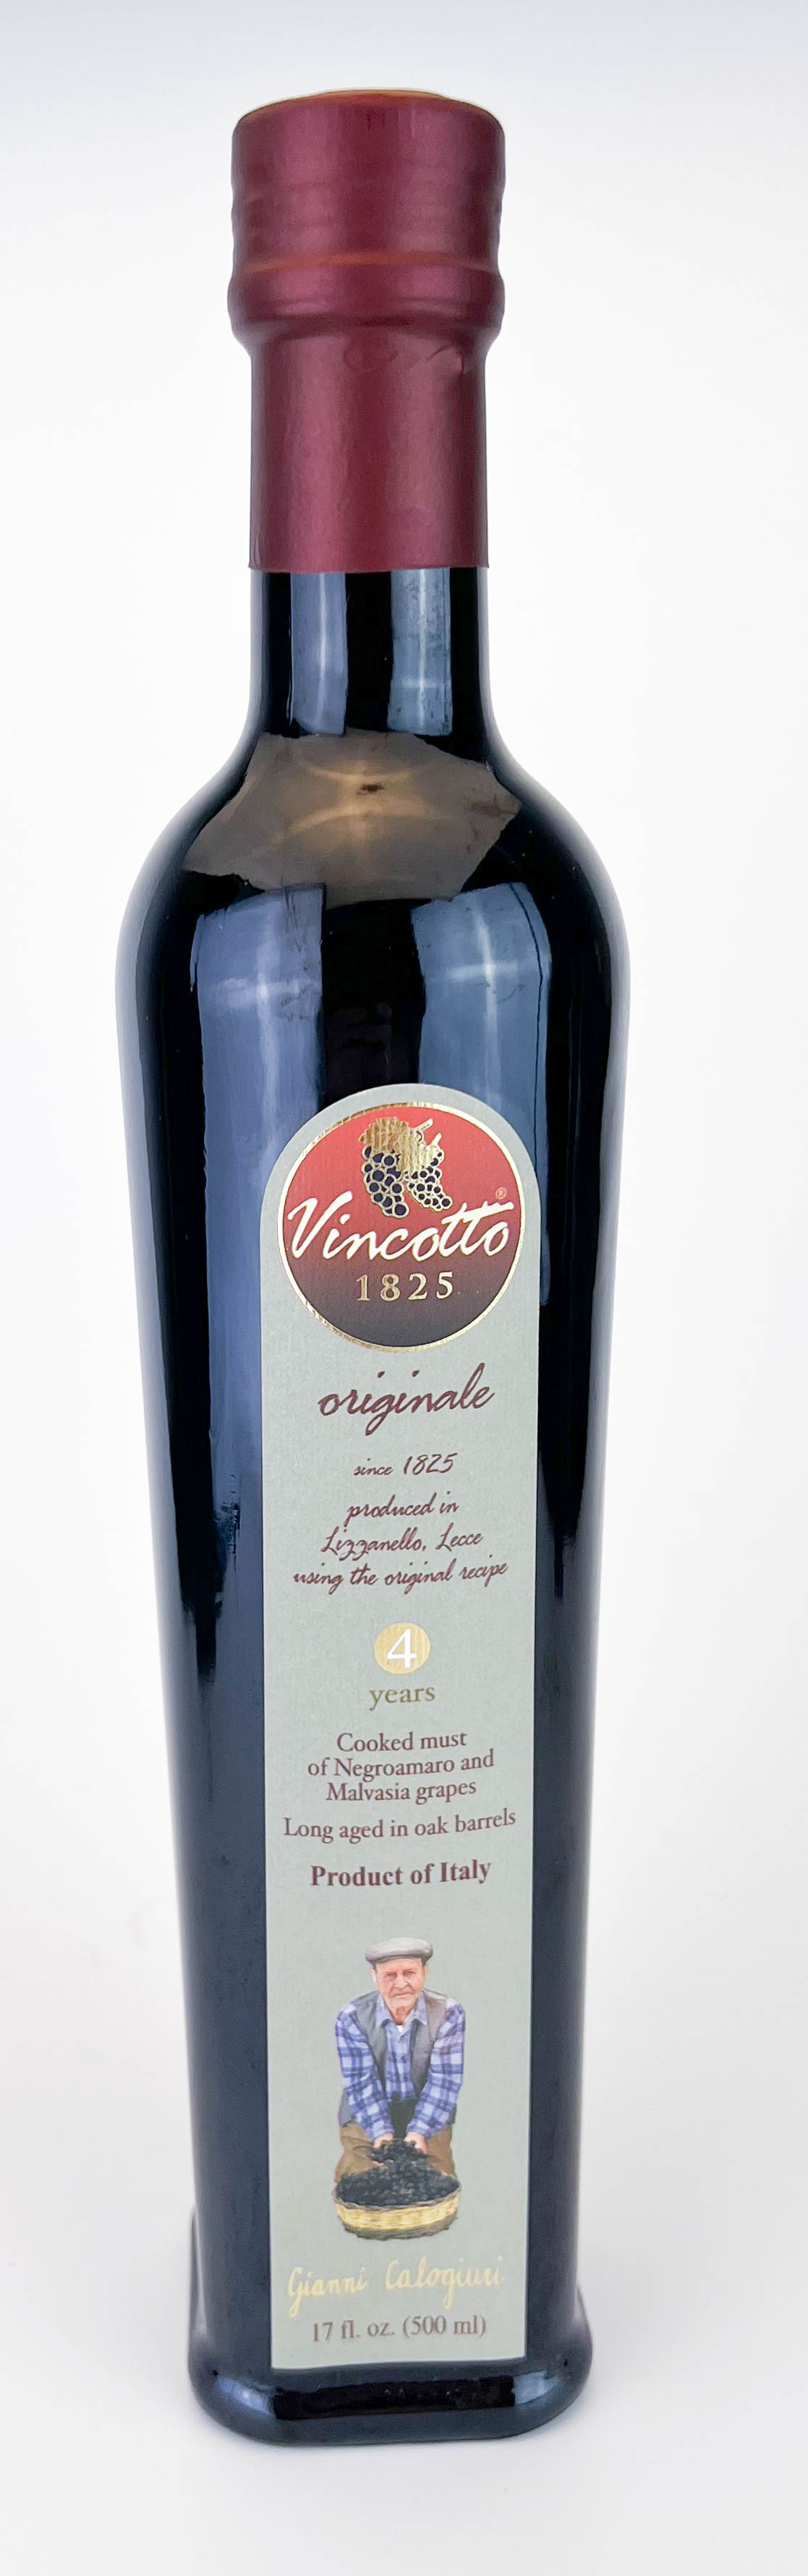 Vincotto ® ORIGINALE bottiglia da 500 ml